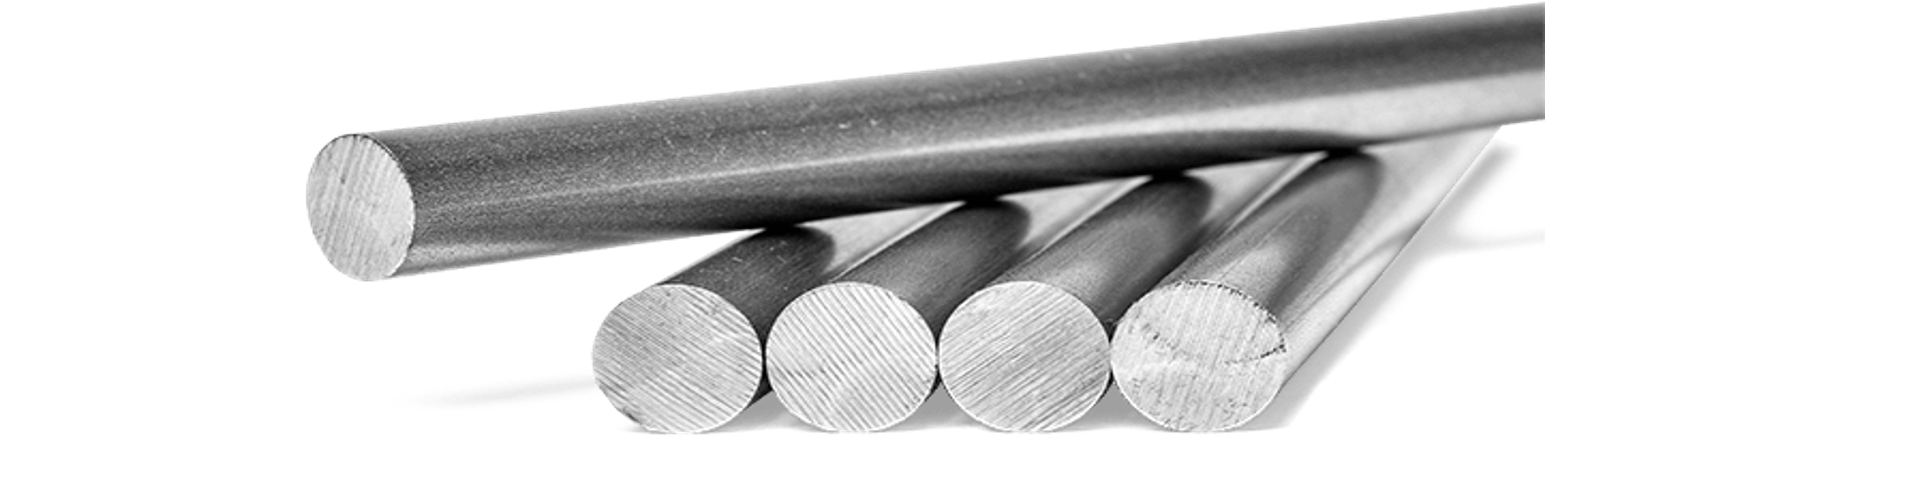 Stainless Steel 440C Round bars